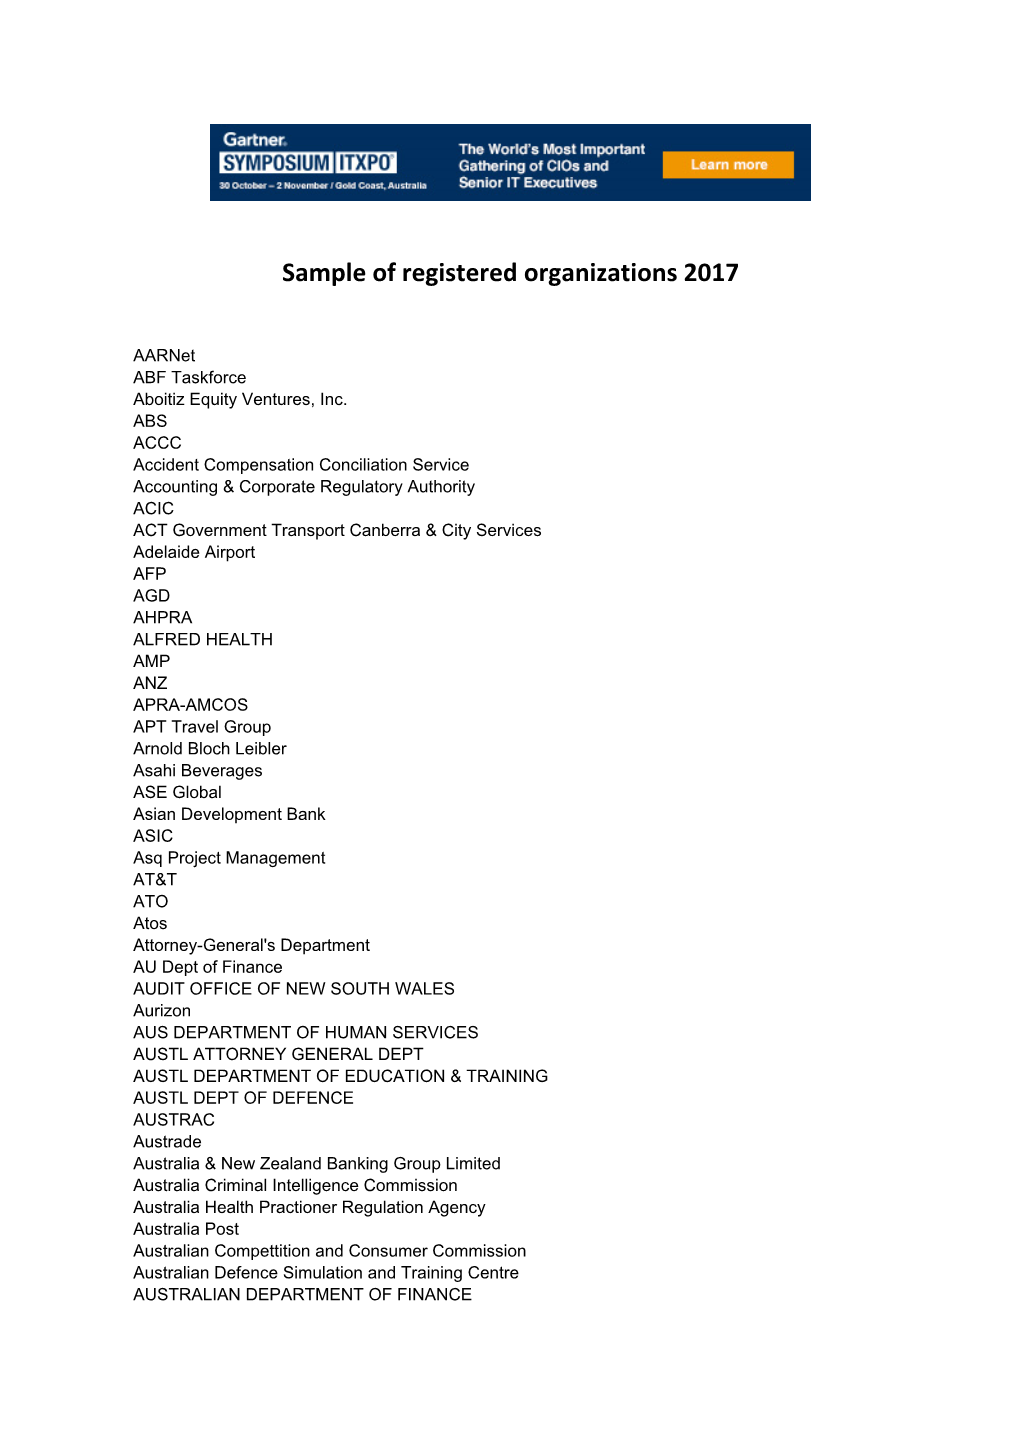 Sample of Registered Organizations 2017